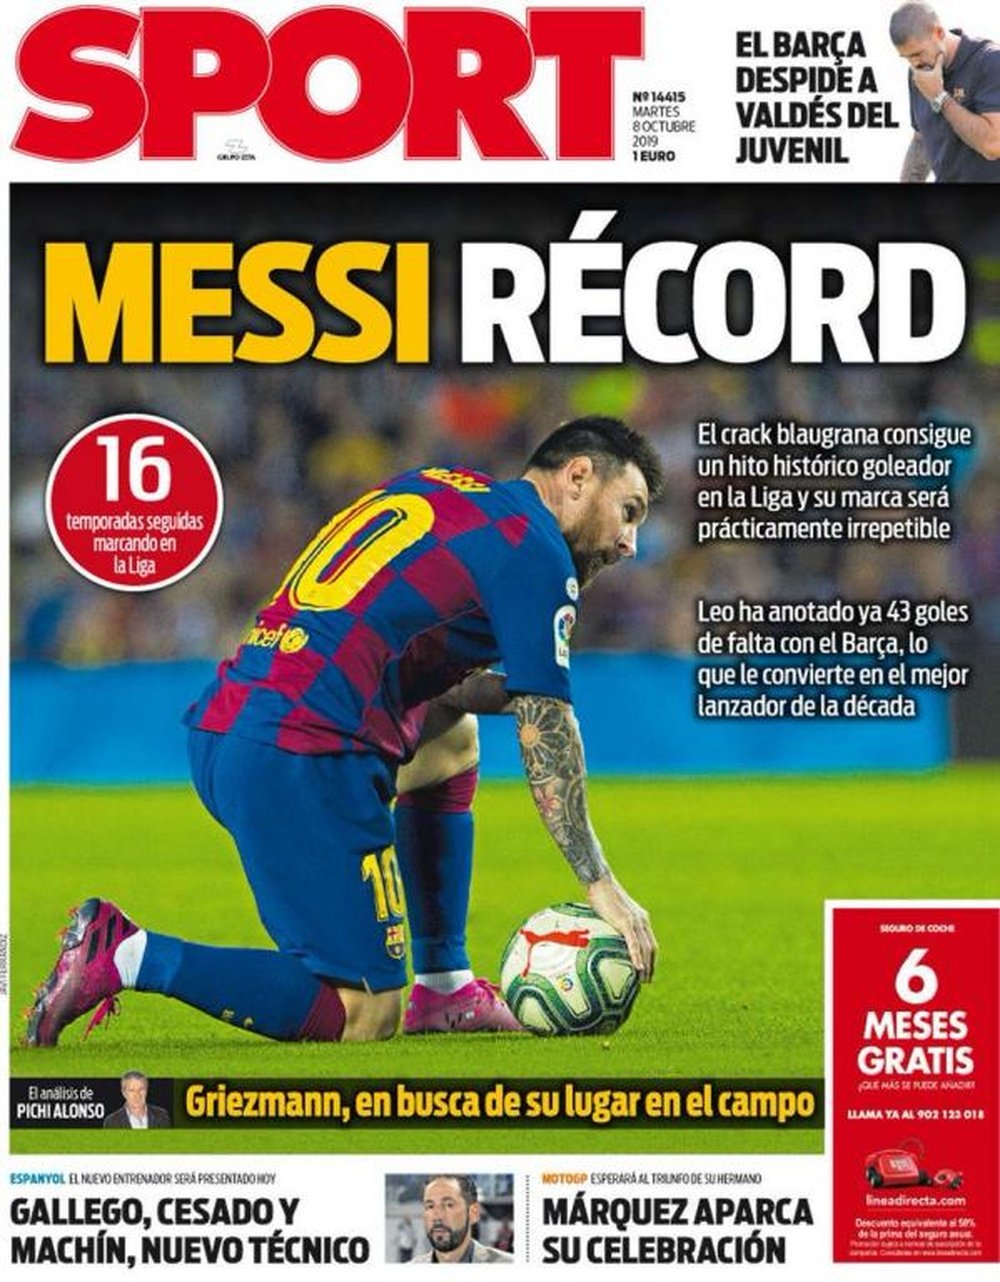 Capa do jornal Sport de 08-10-19. Sport